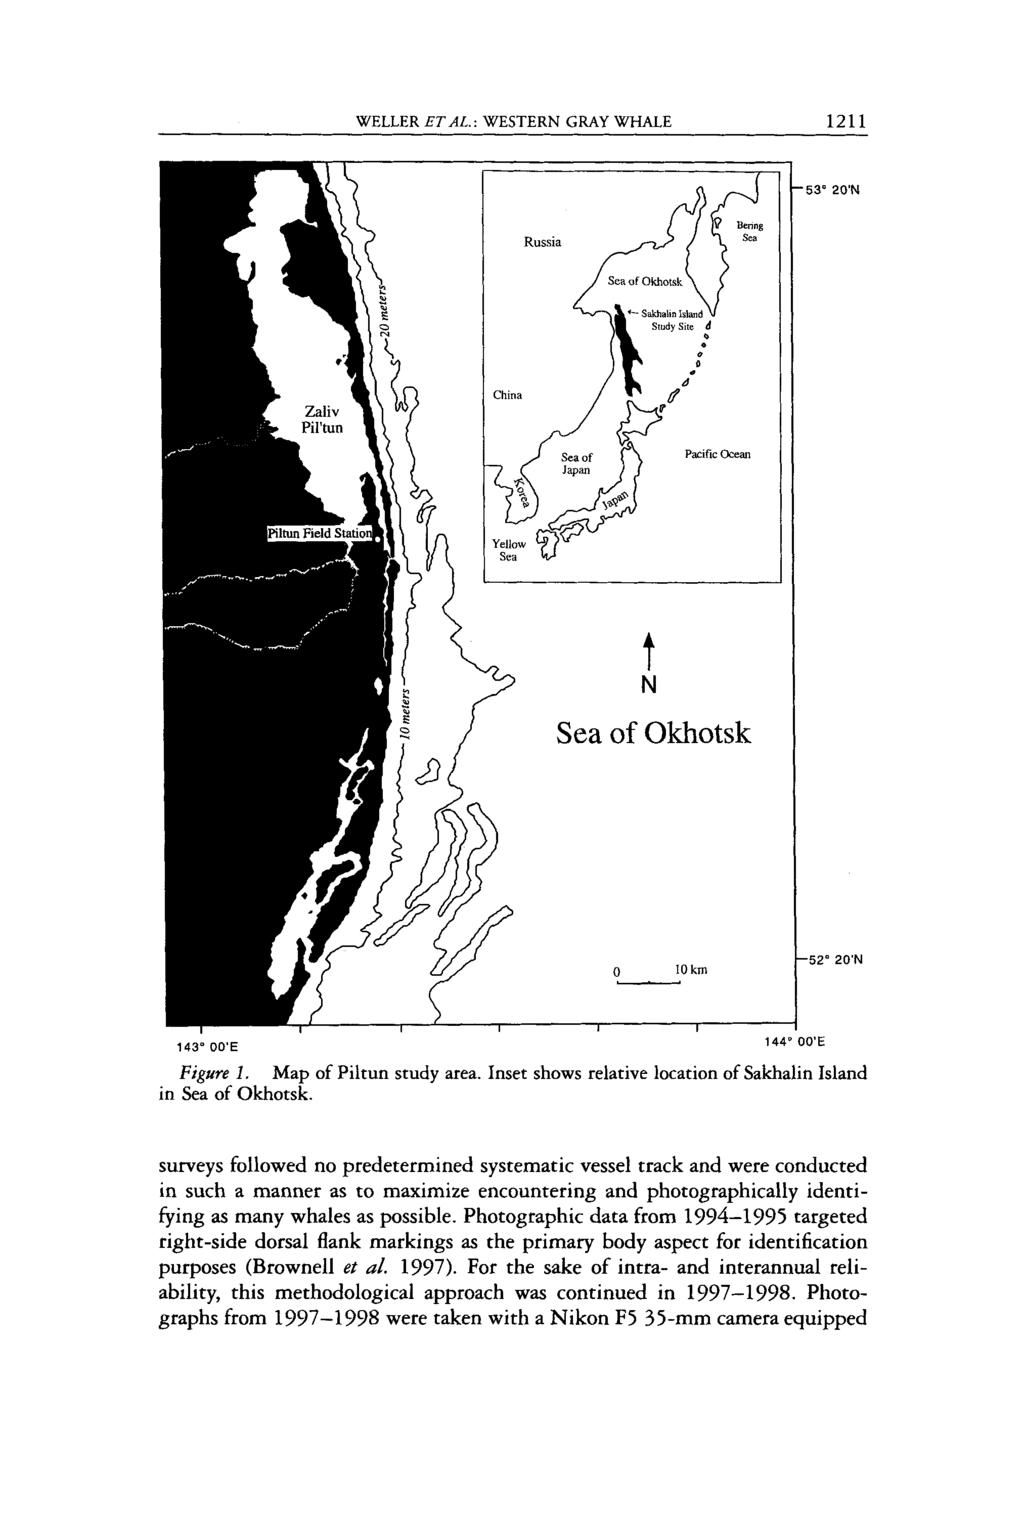 WELLER ETAL.: WESTERN GRAY WHALE 1211 1-53' 20" Pacific Ocean 4 I N Se a of * Okhots 143" OO'E - e - I 10 km -52' 20" 144" OO'E Figure I. Map of Piltun study area.